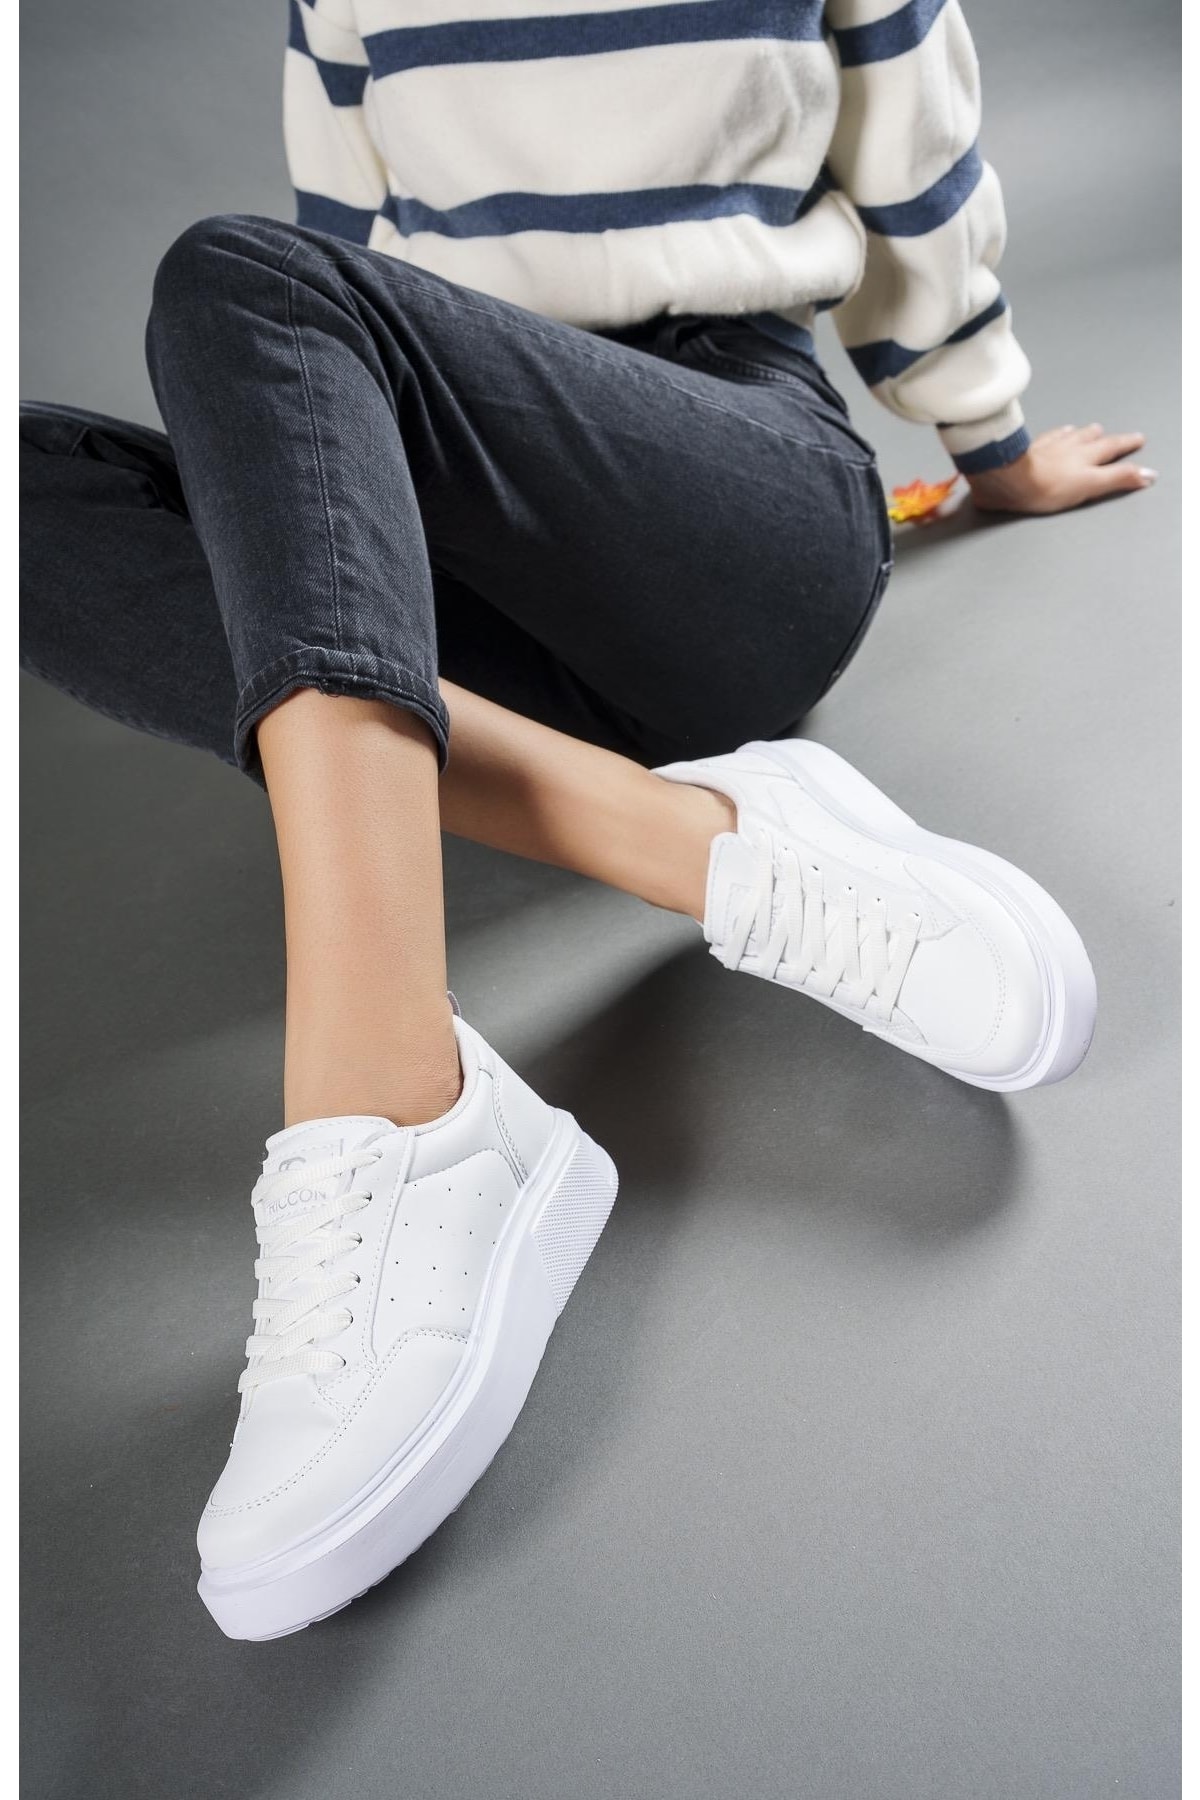 Riccon Women's Sneakers 0012148 White